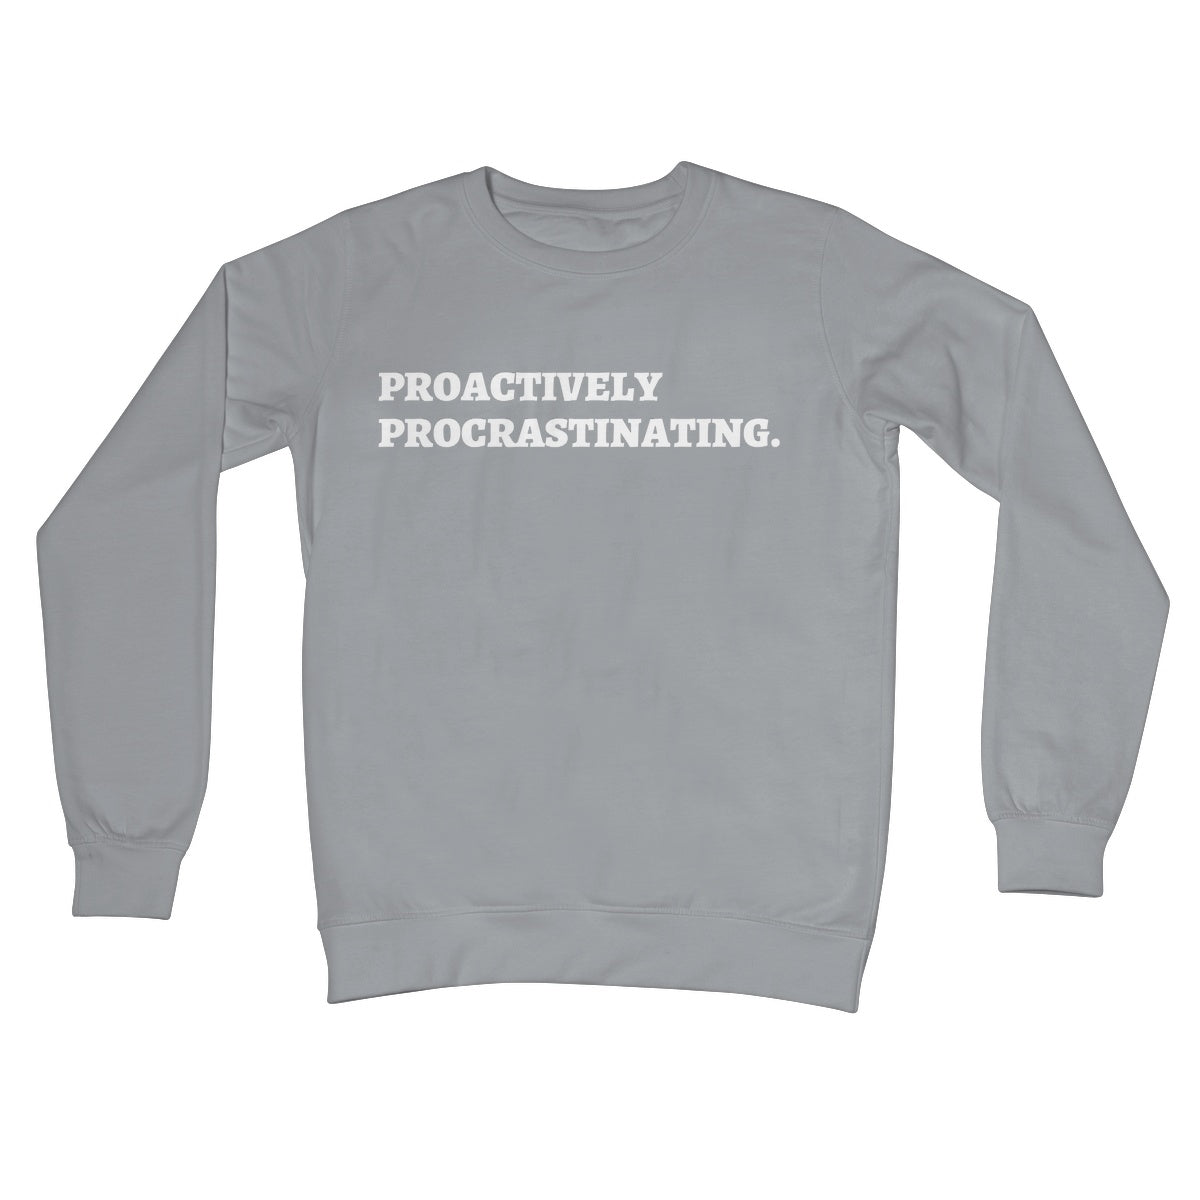 proactively procrastinating jumper grey